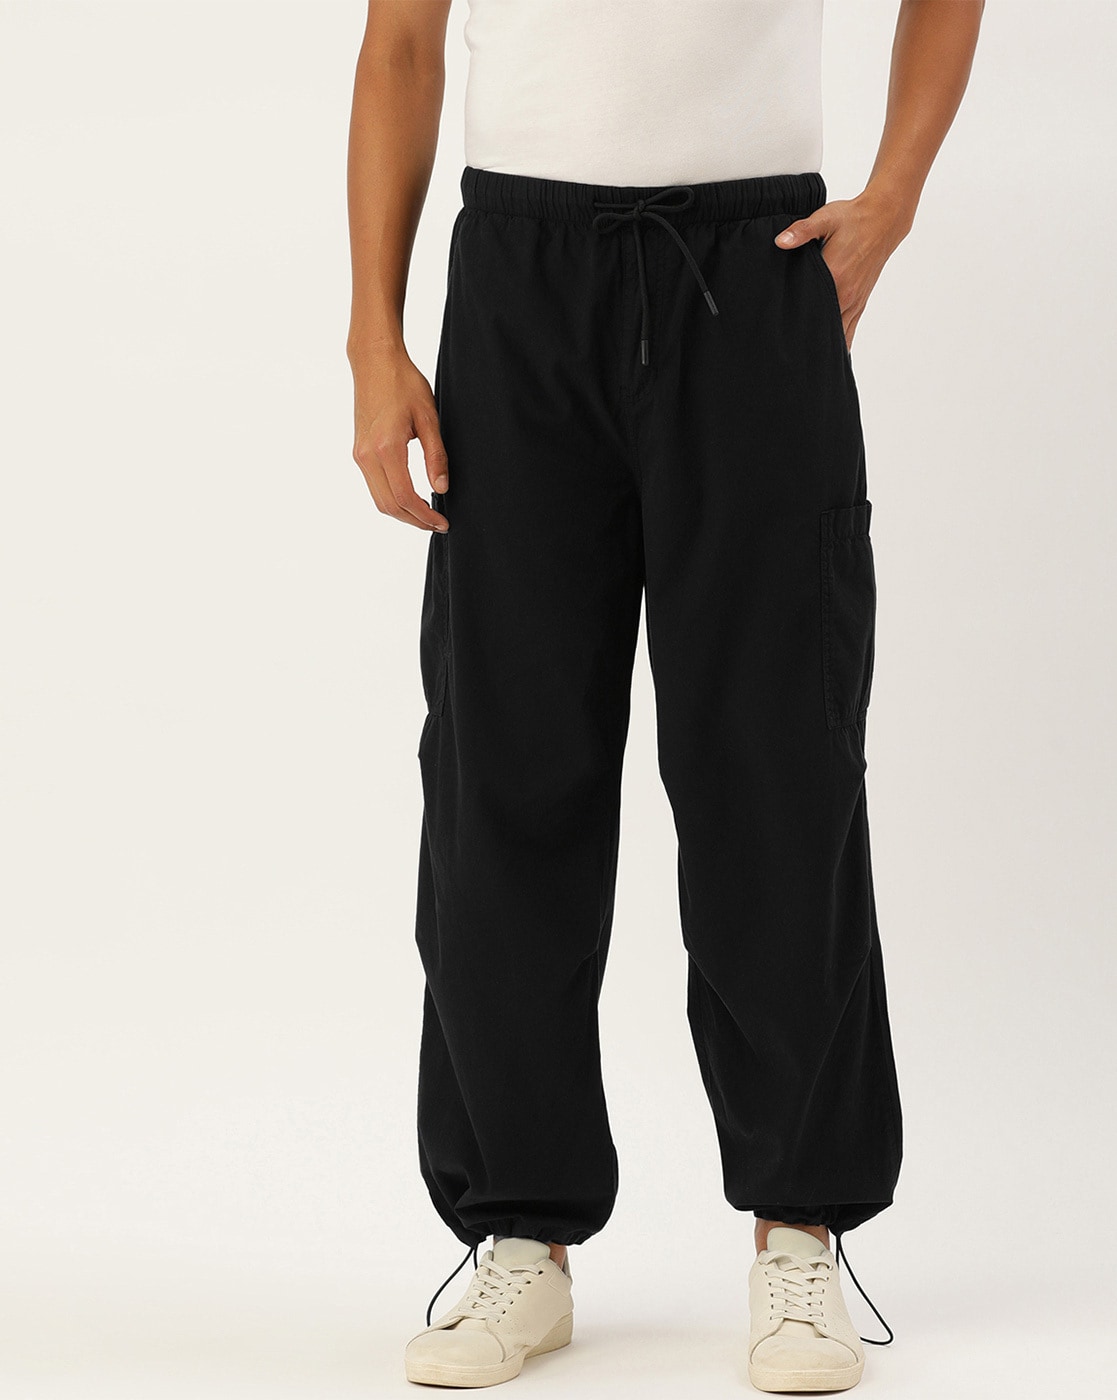 Fjallraven Nilla G-1000 Women's Hiking Trekking Pants Trousers size US 29  EU 38 | eBay